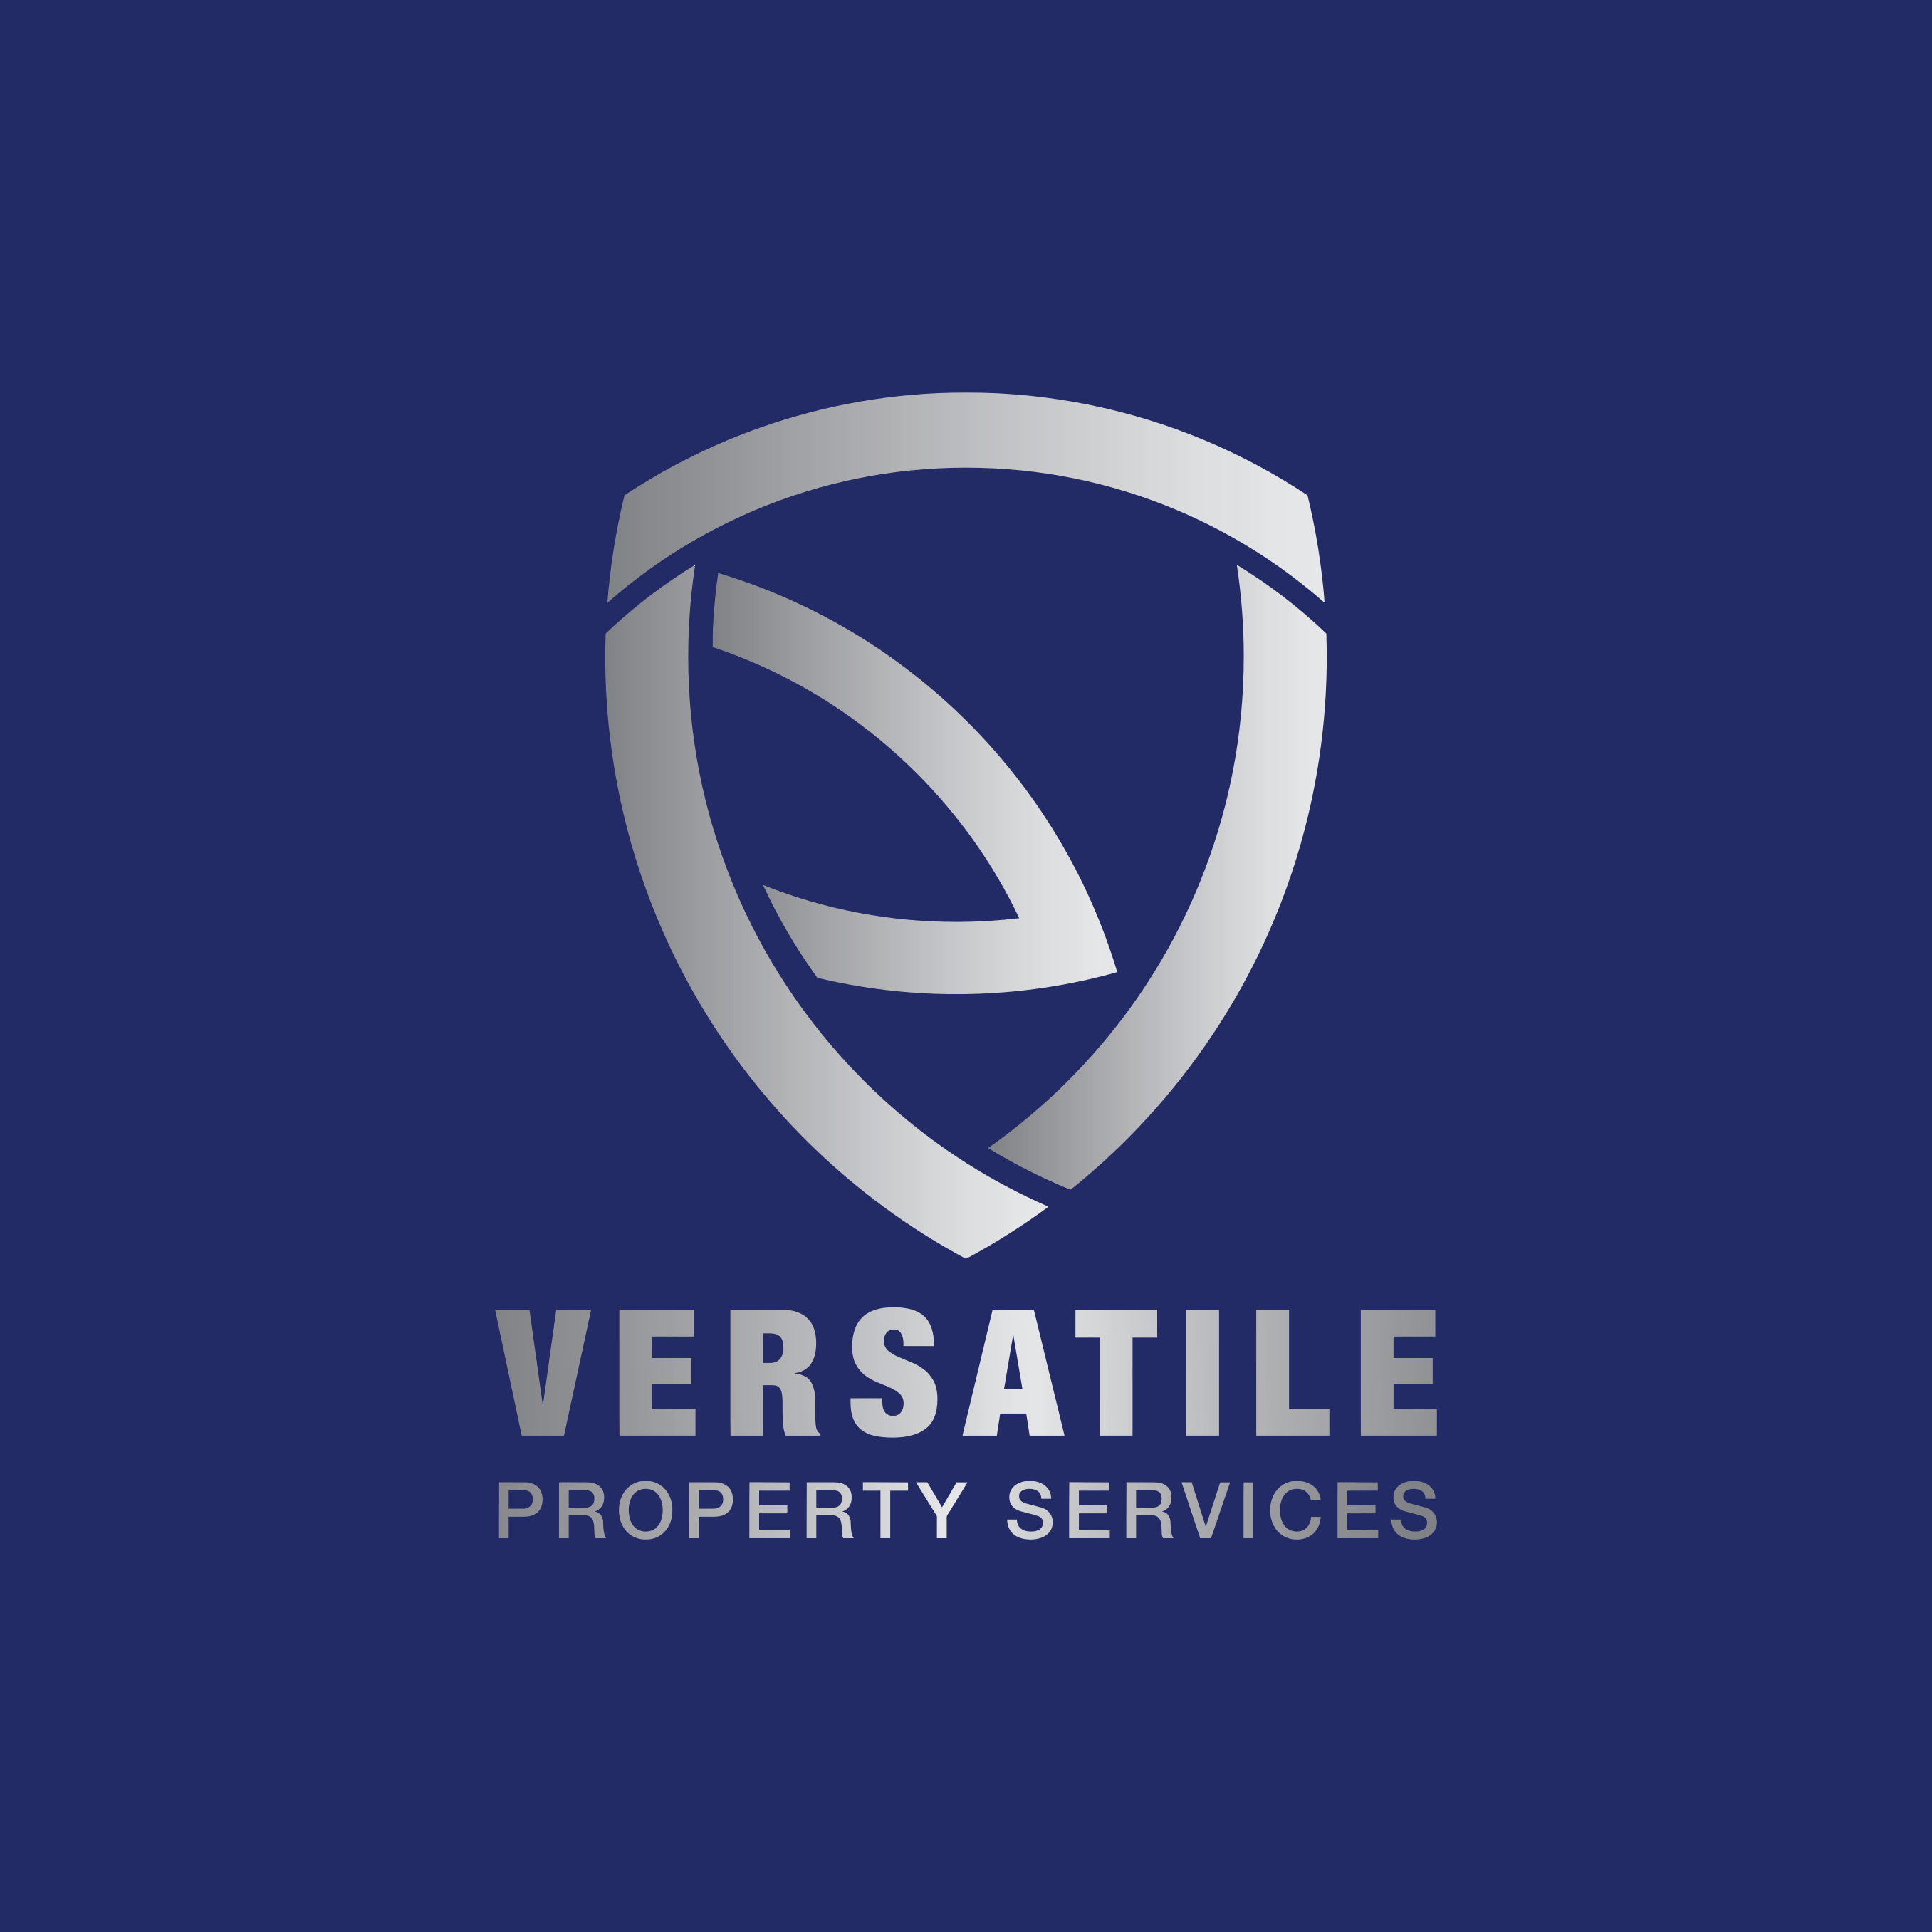 Versatile Property Services